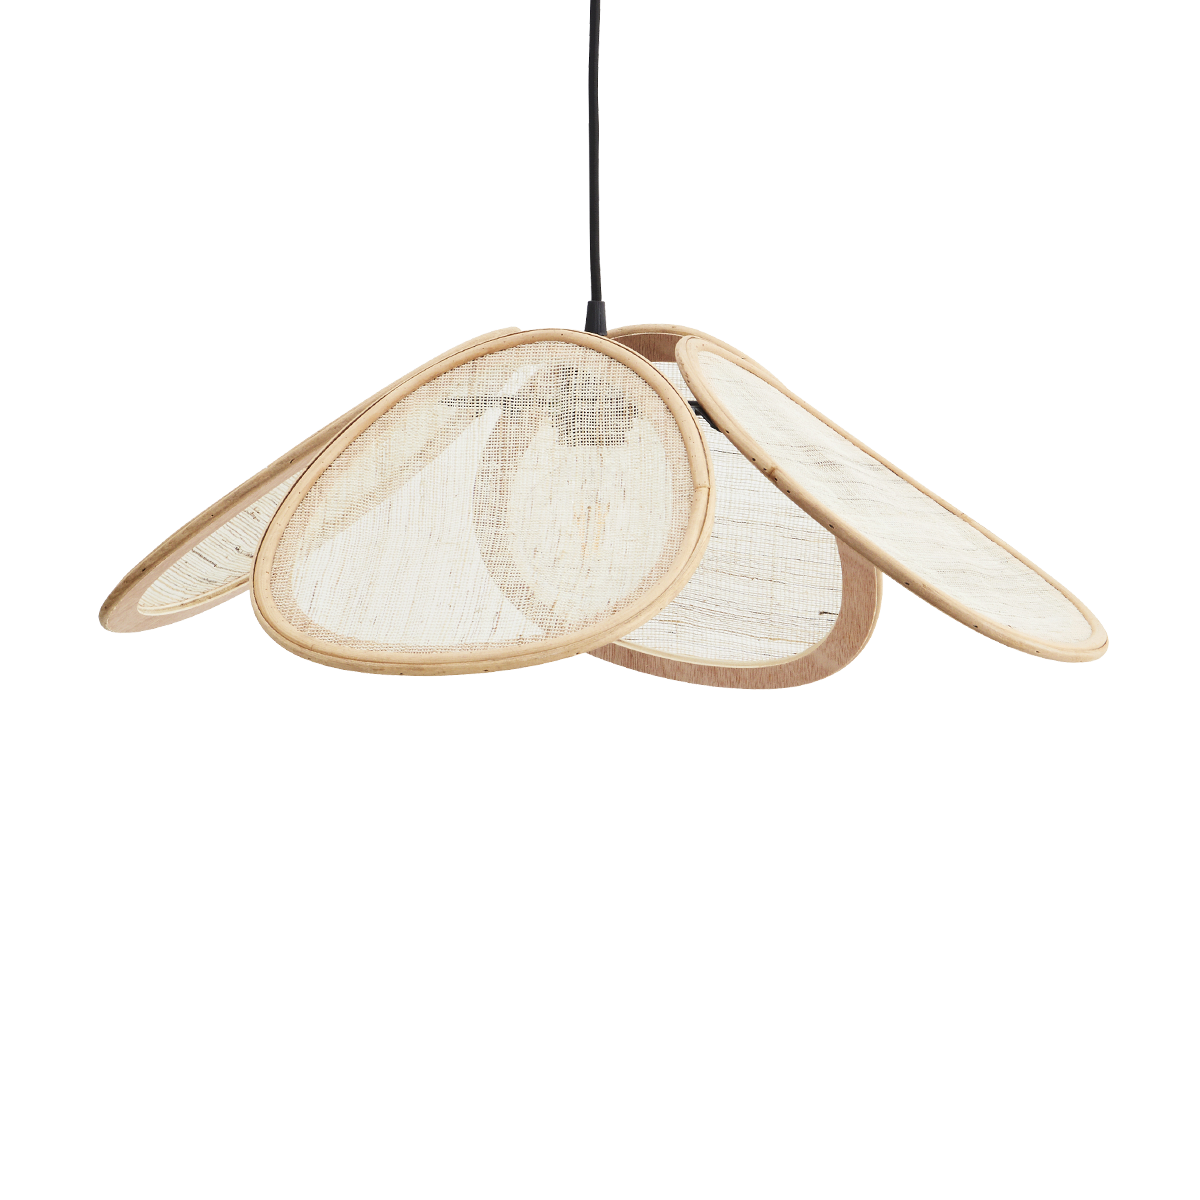 Rattan ceiling lamp w/ linen